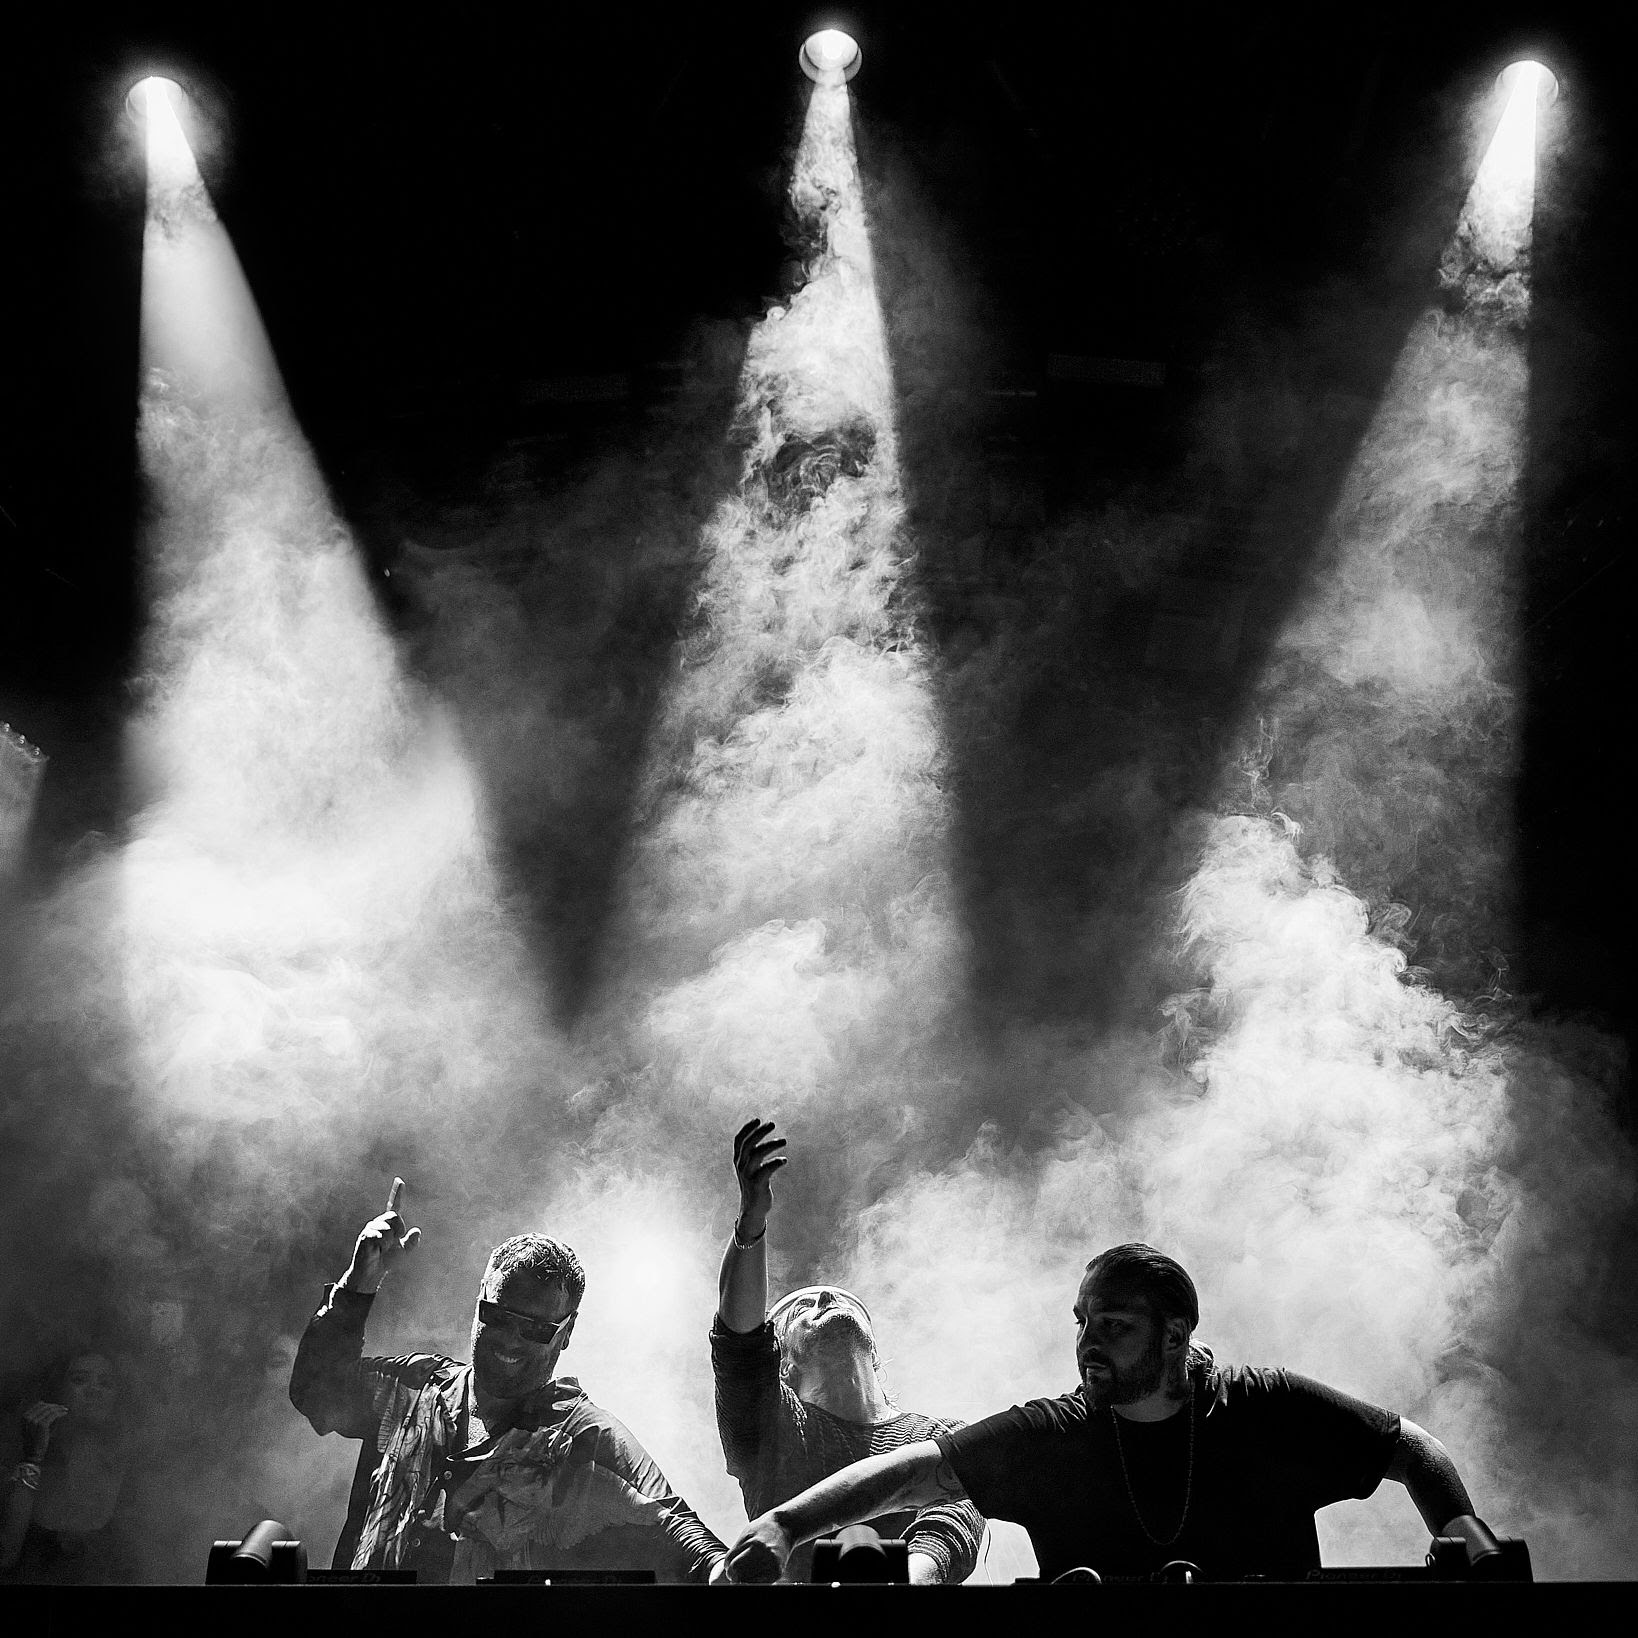 Swedish House Mafia return to Ushuaïa for one exclusive show